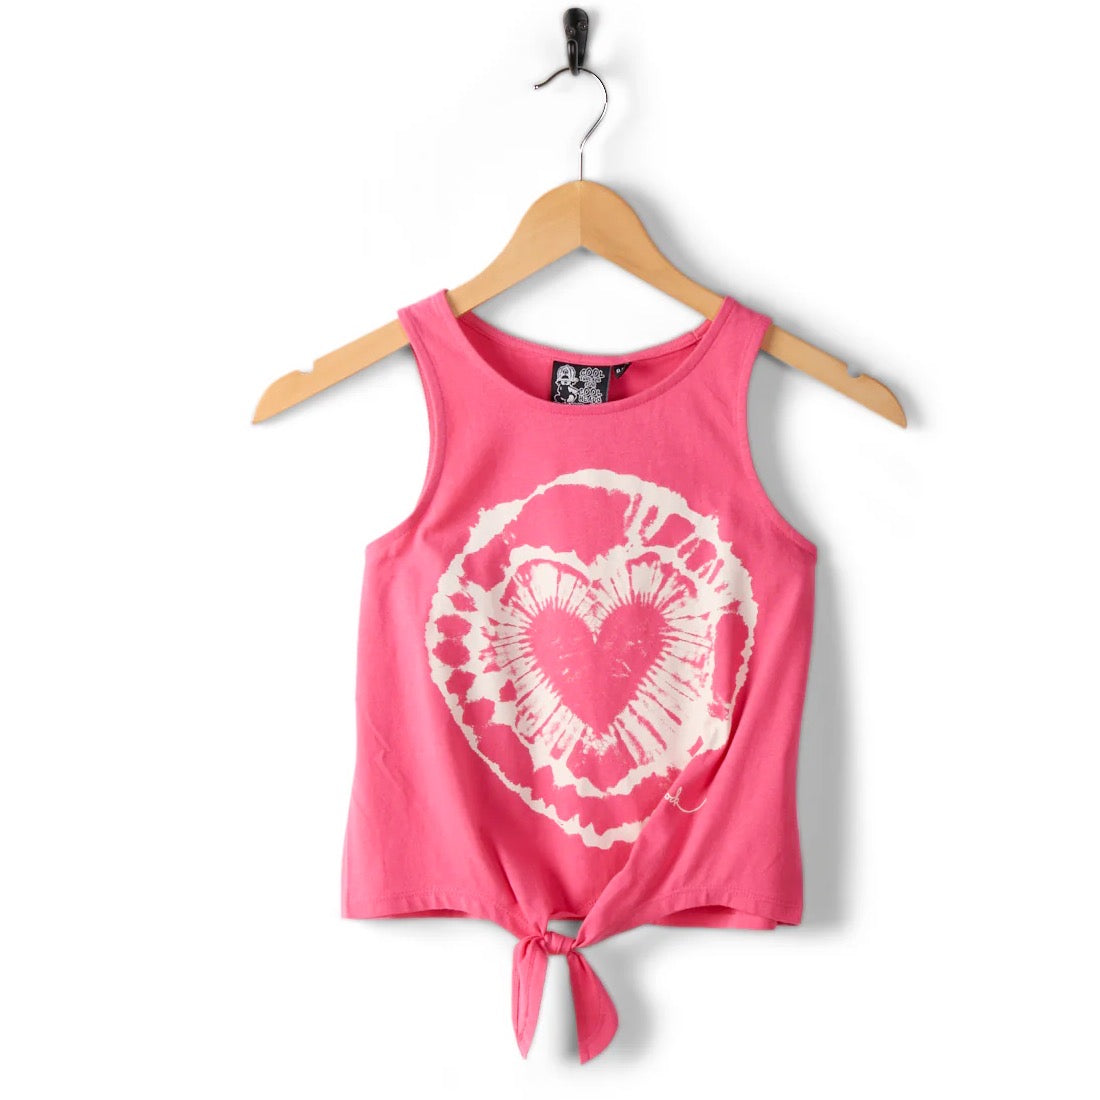 Saltrock Girls Tie Dye Heart Vest Top Clothing 9/10YRS / Pink,11/12YRS / Pink,13YRS / Pink